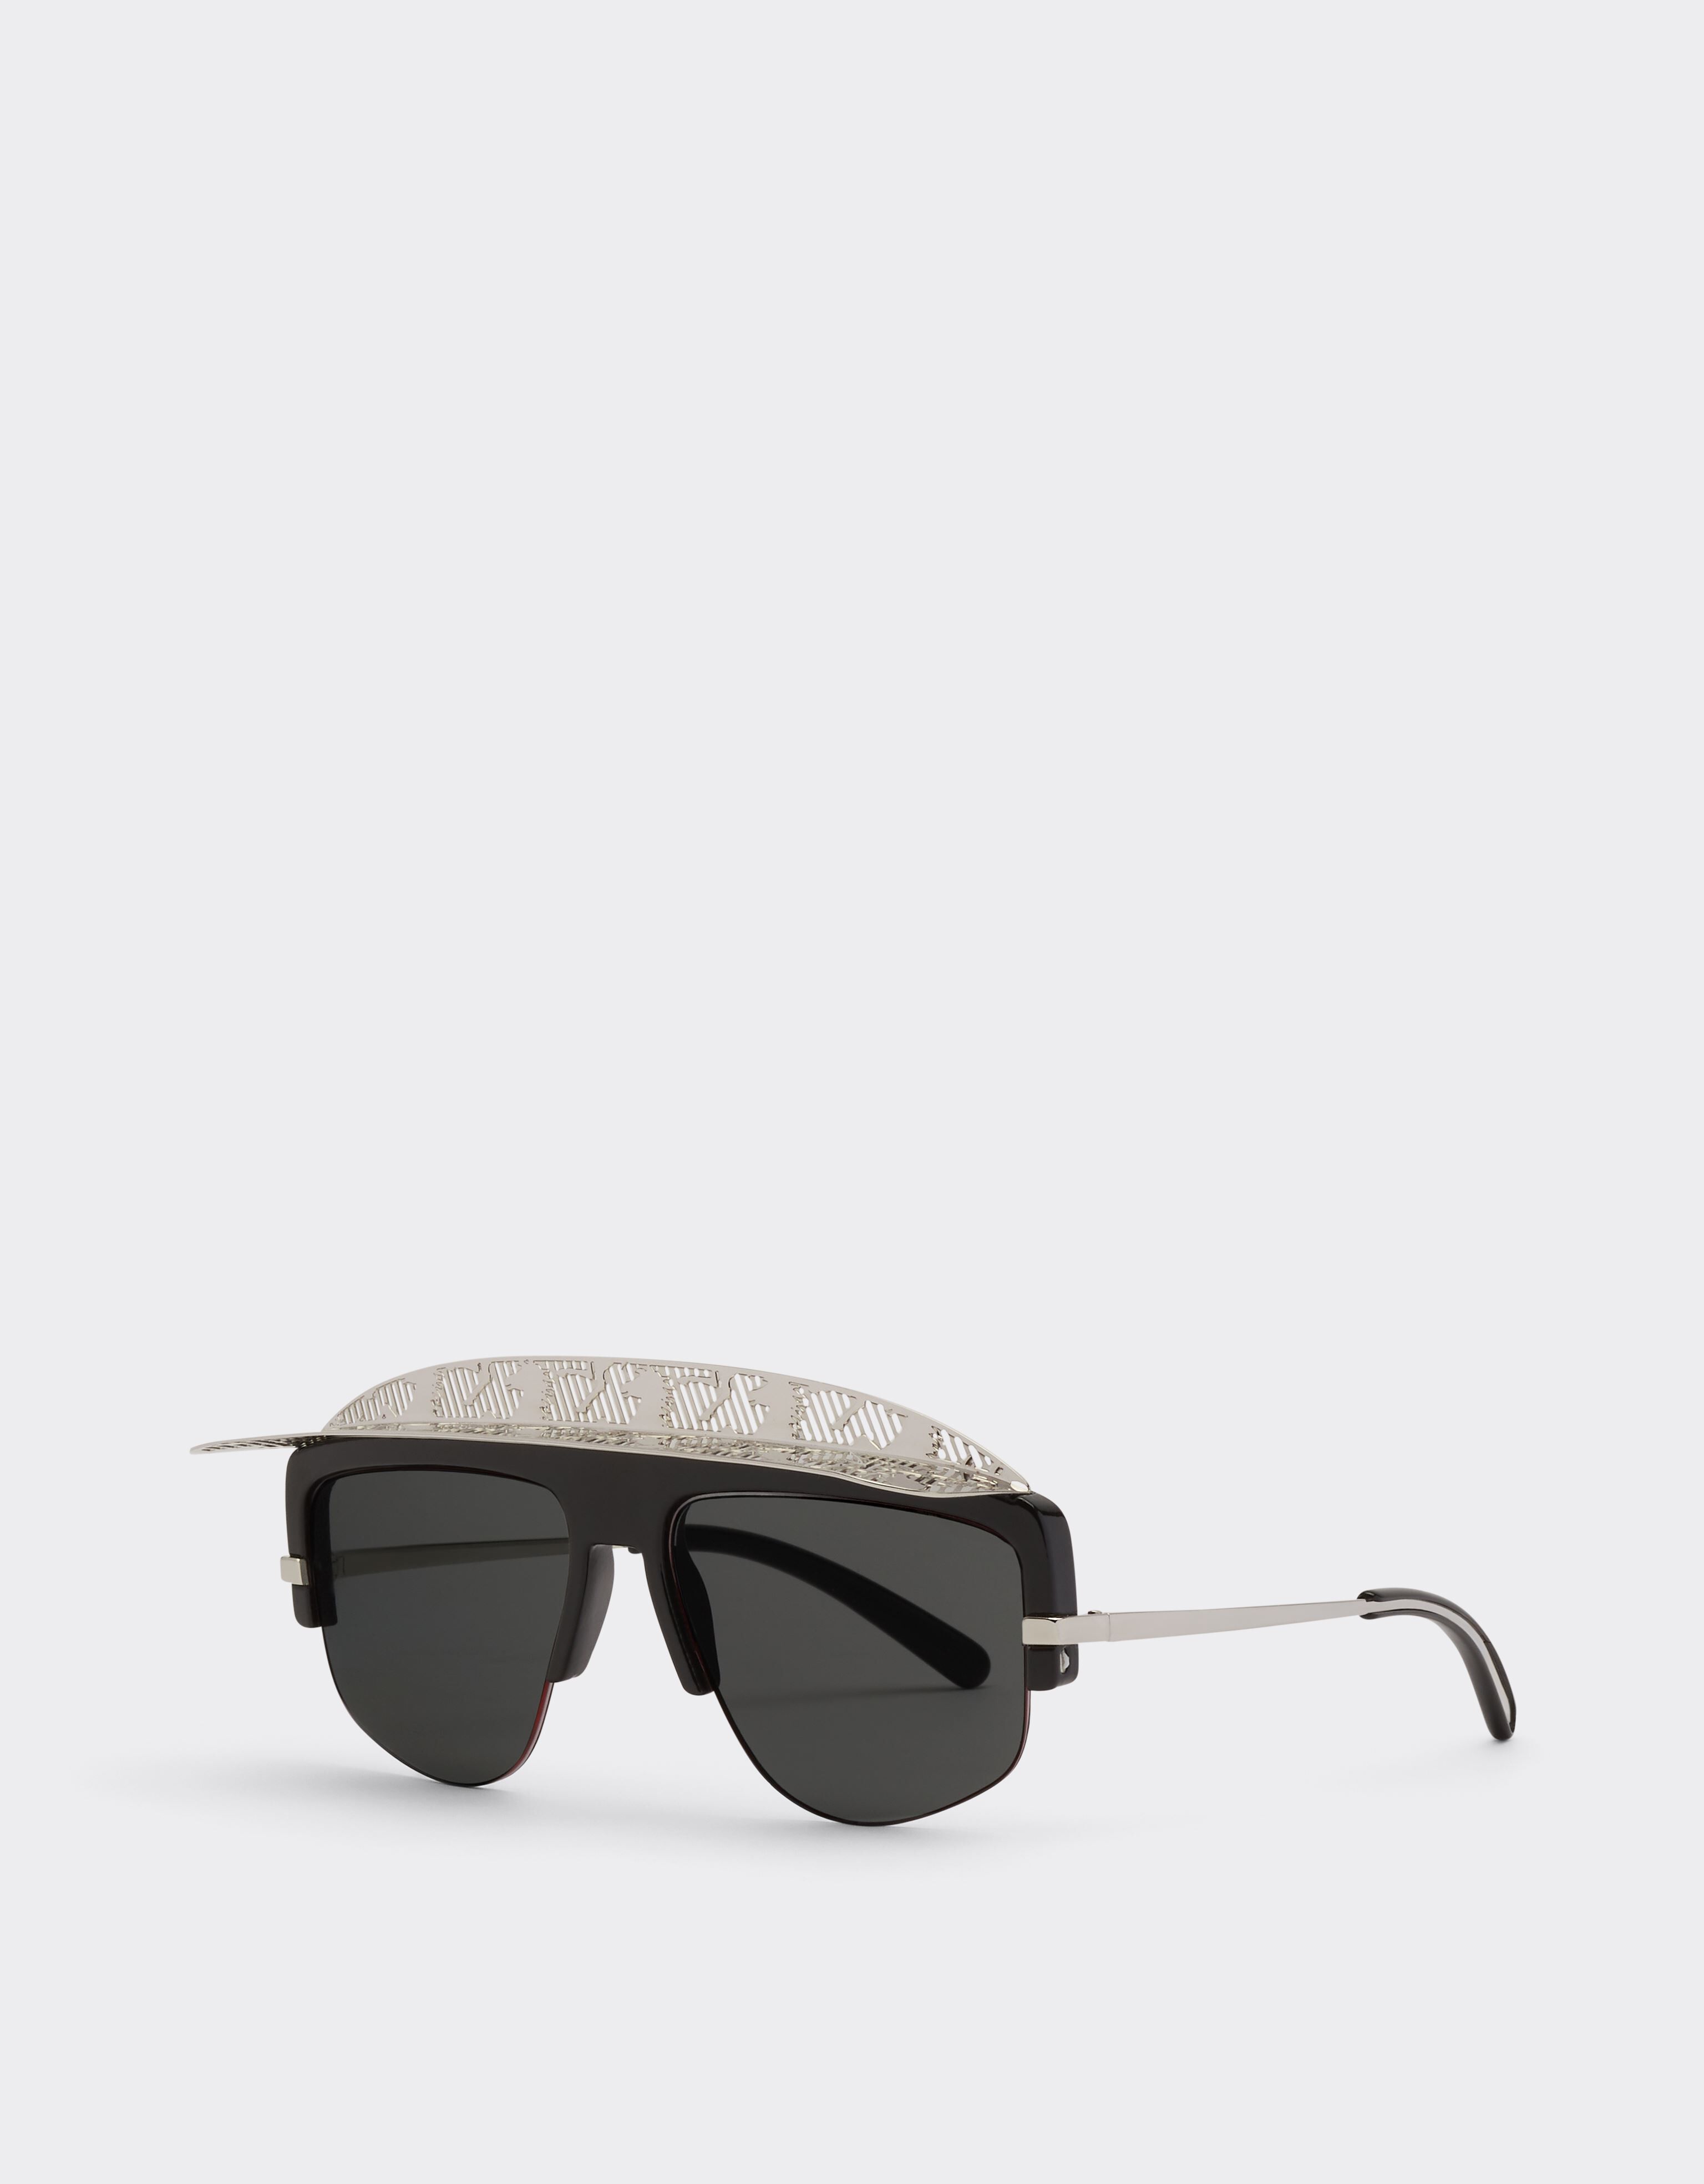 Ferrari Ferrari sunglasses with silver grey mirror lens Black F0829f